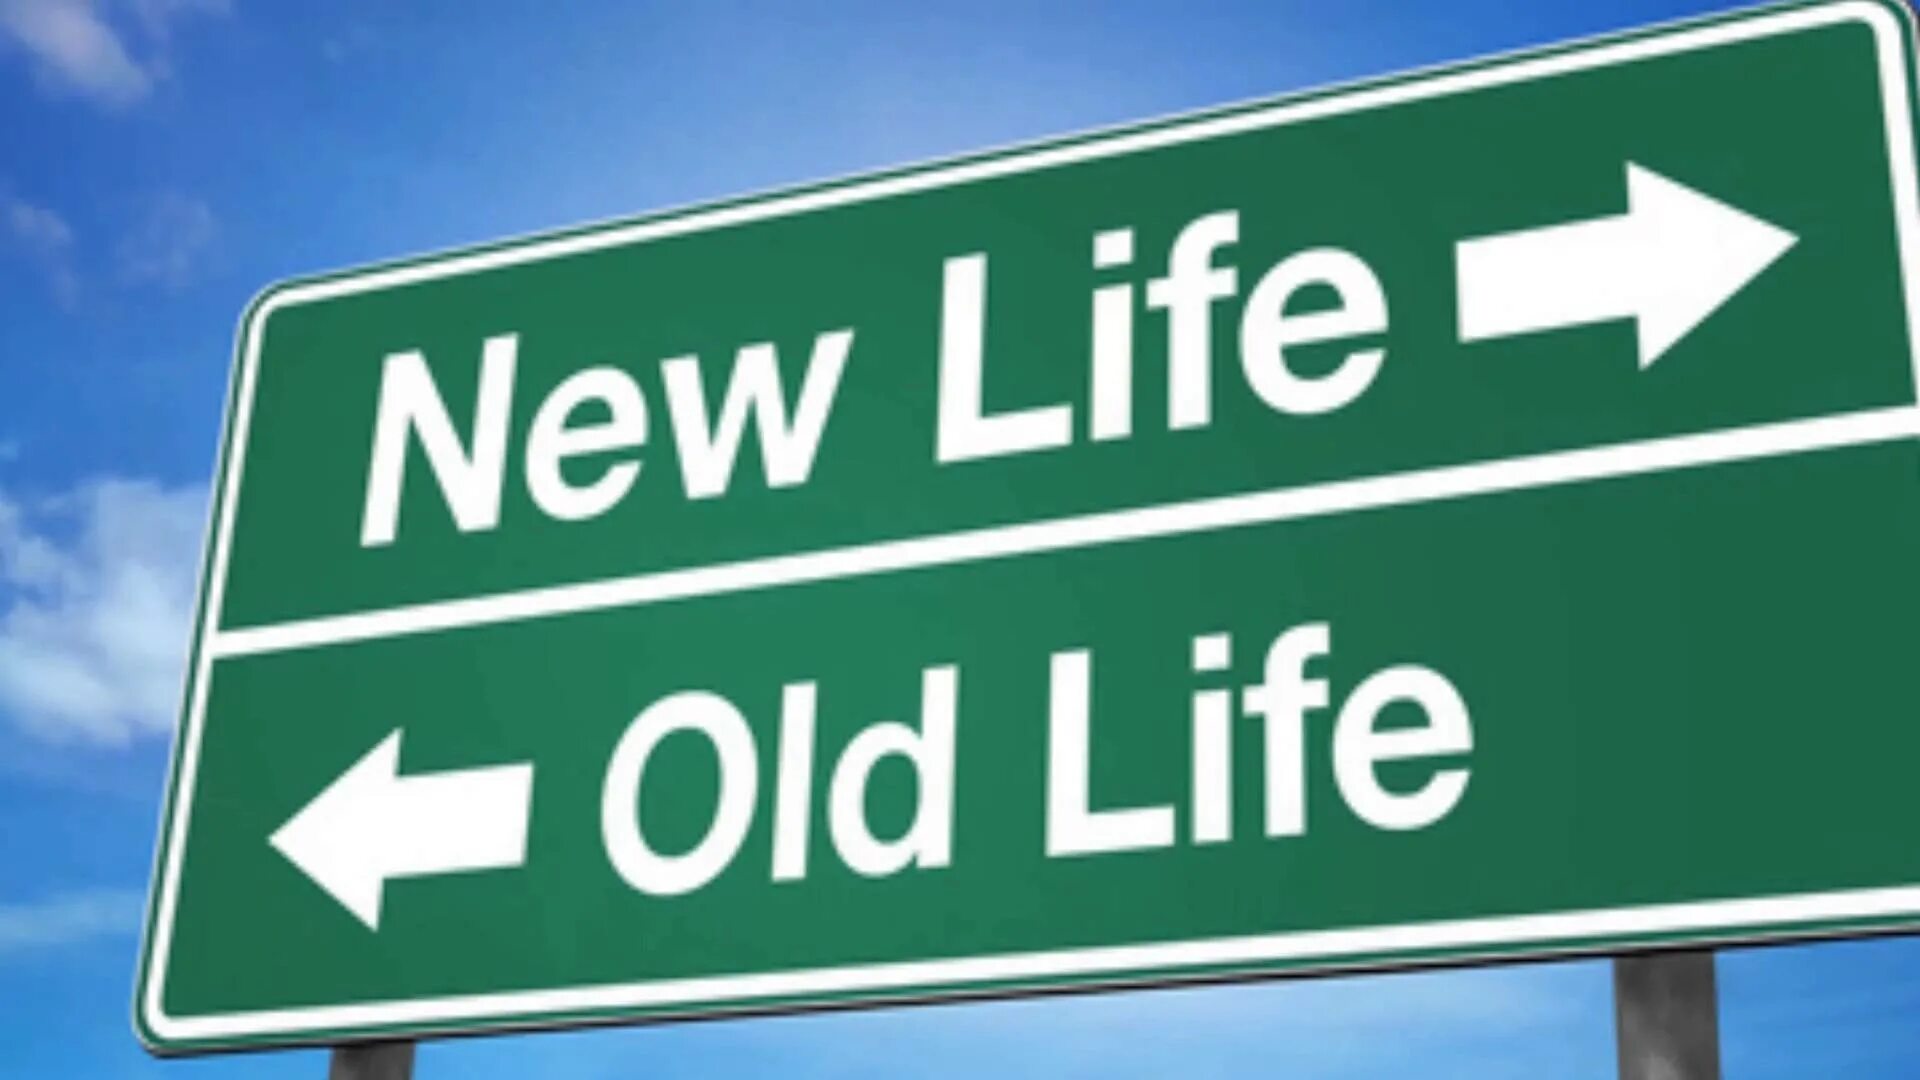 Get new life. The New Life. New Life фото расположения. Фото новая жизнь по английски. Great New Life.